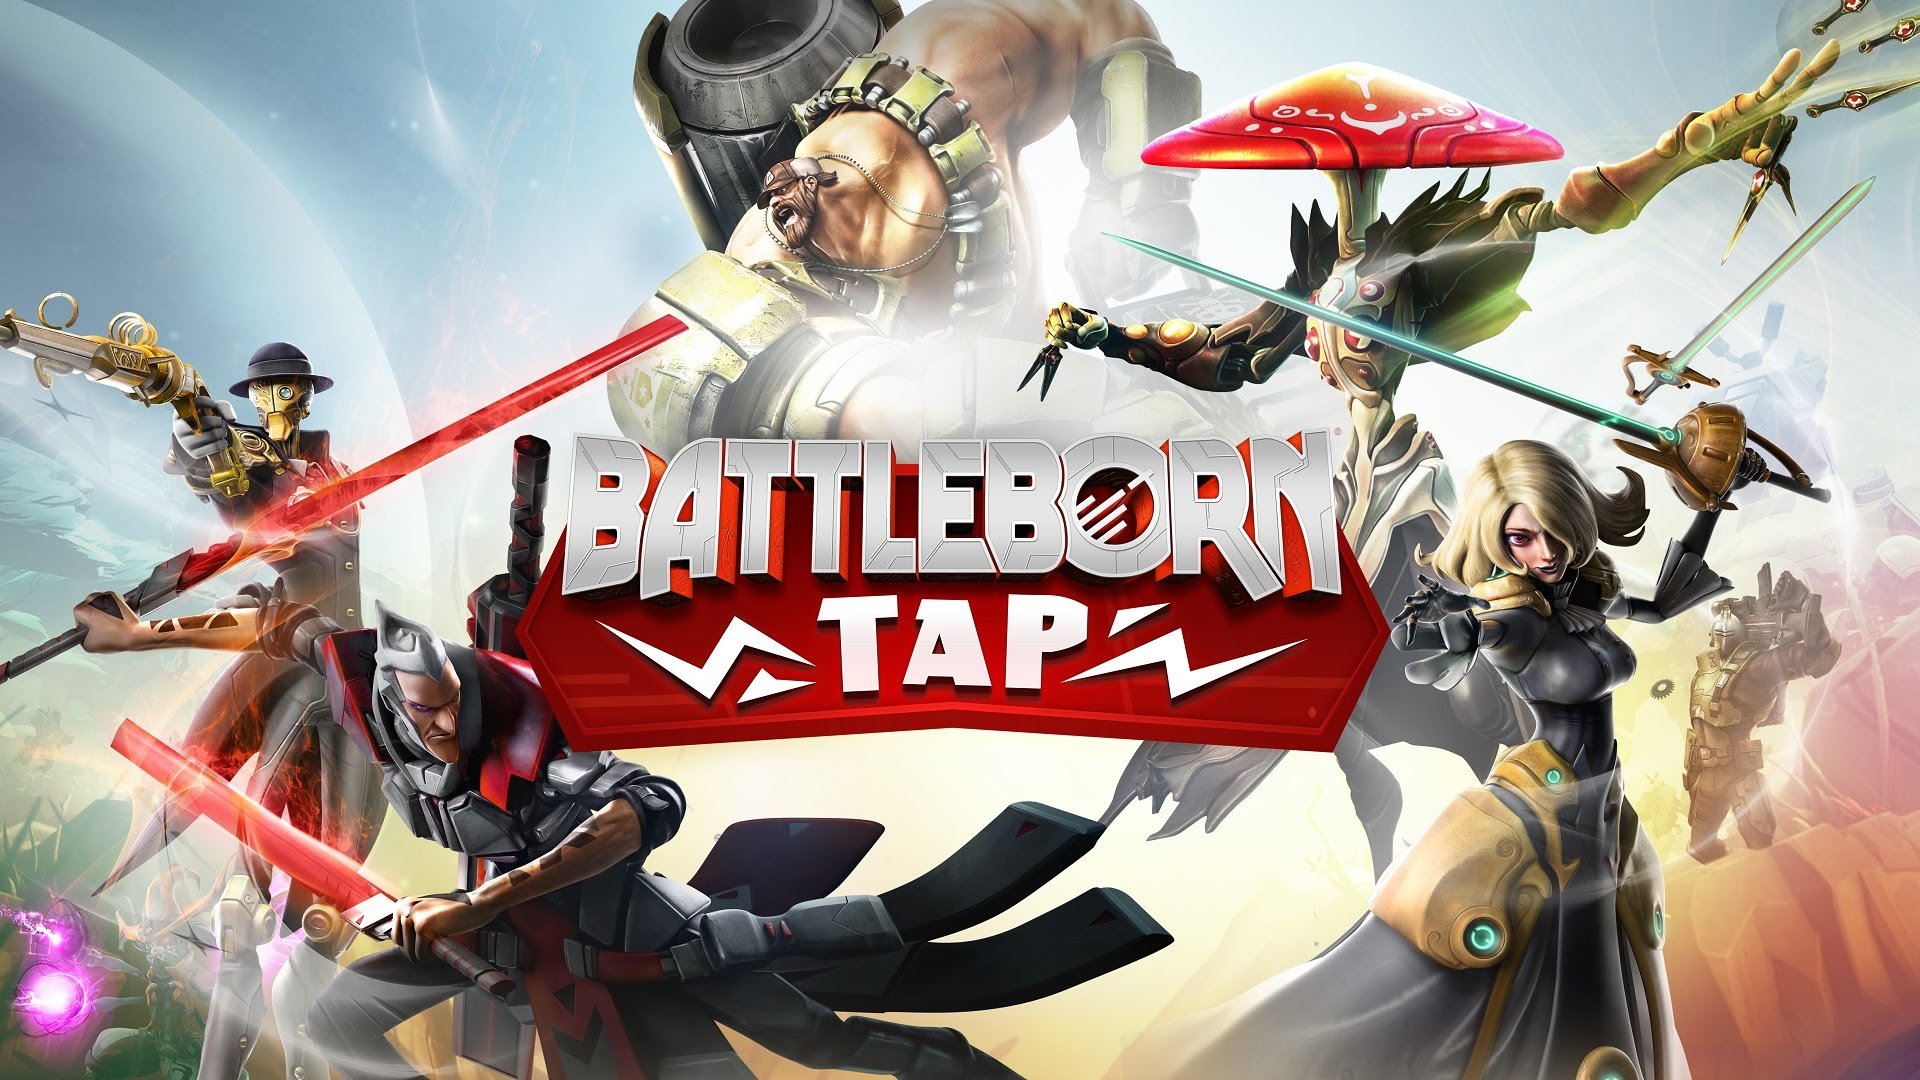 Battleborn Tap is a Mobile Battleborn Game, because BATTLEBORN